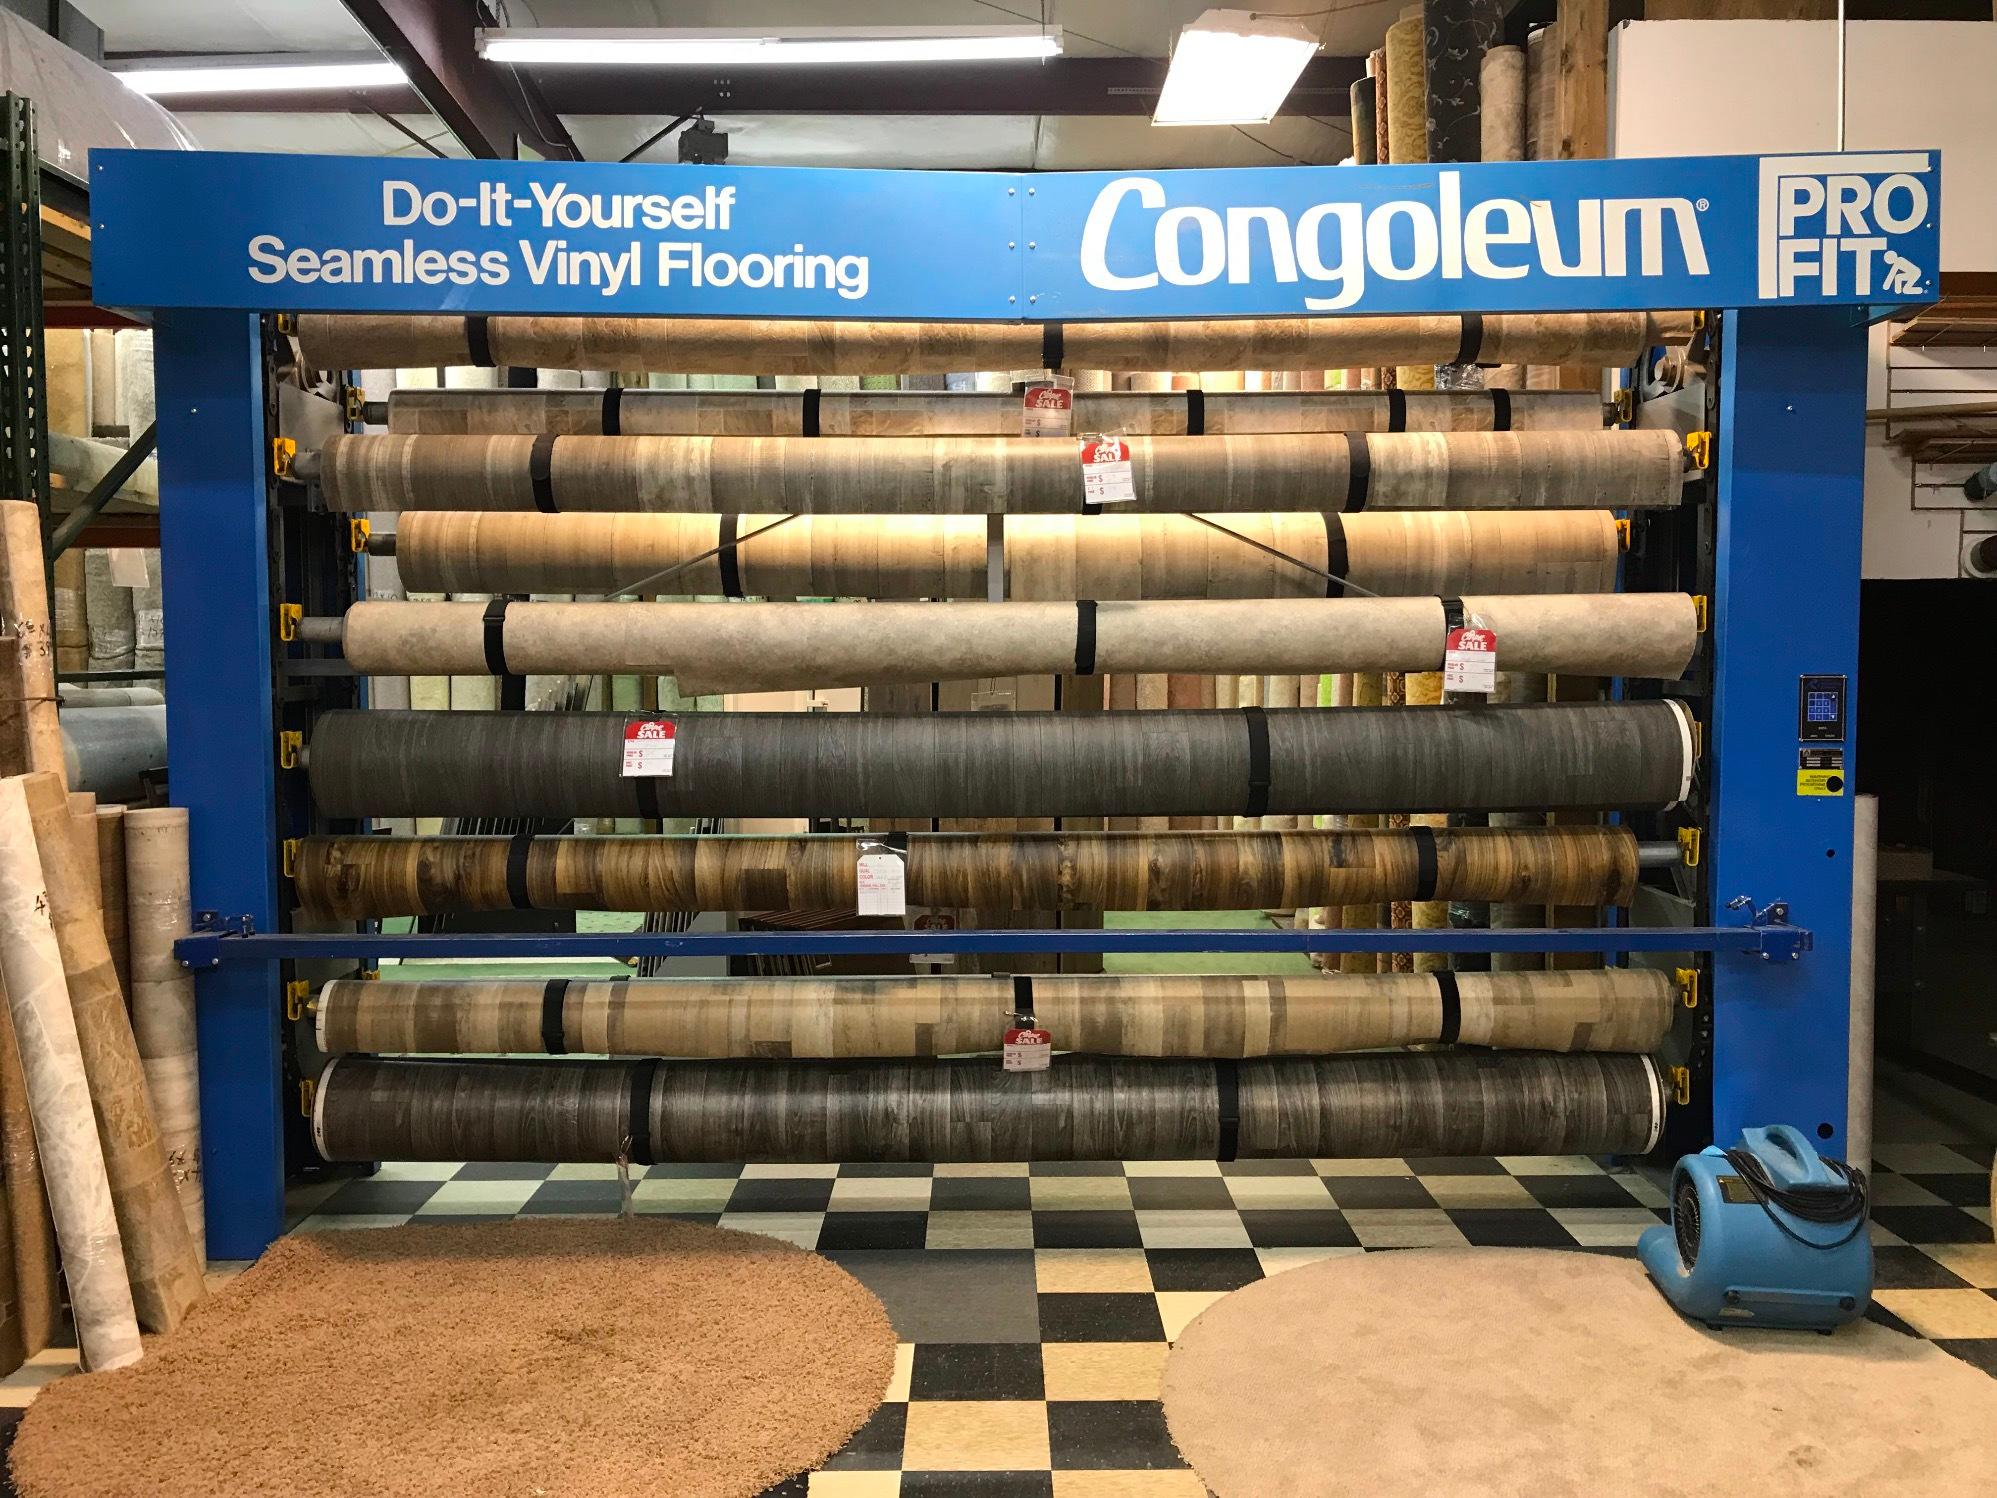 Carpet Center & Floors Photo